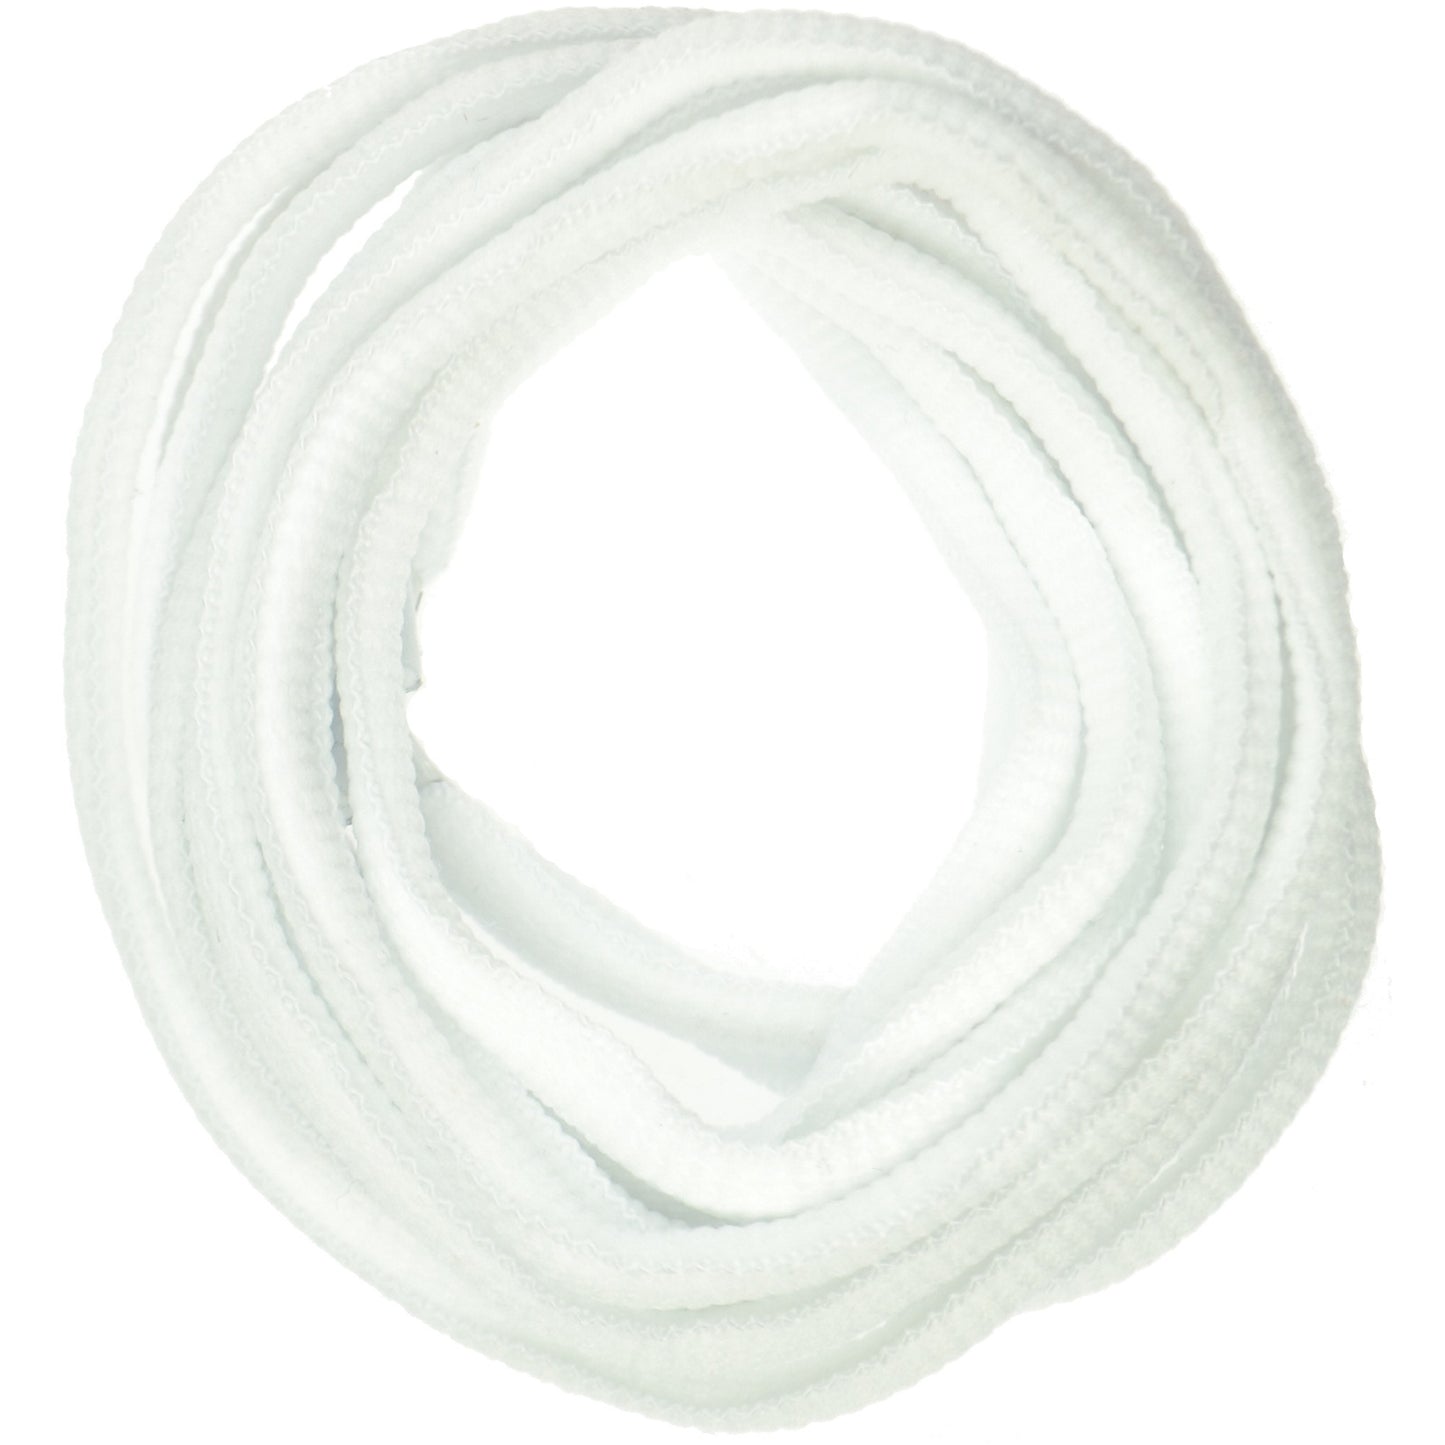 114cm Oval Sports Shoe Laces - White